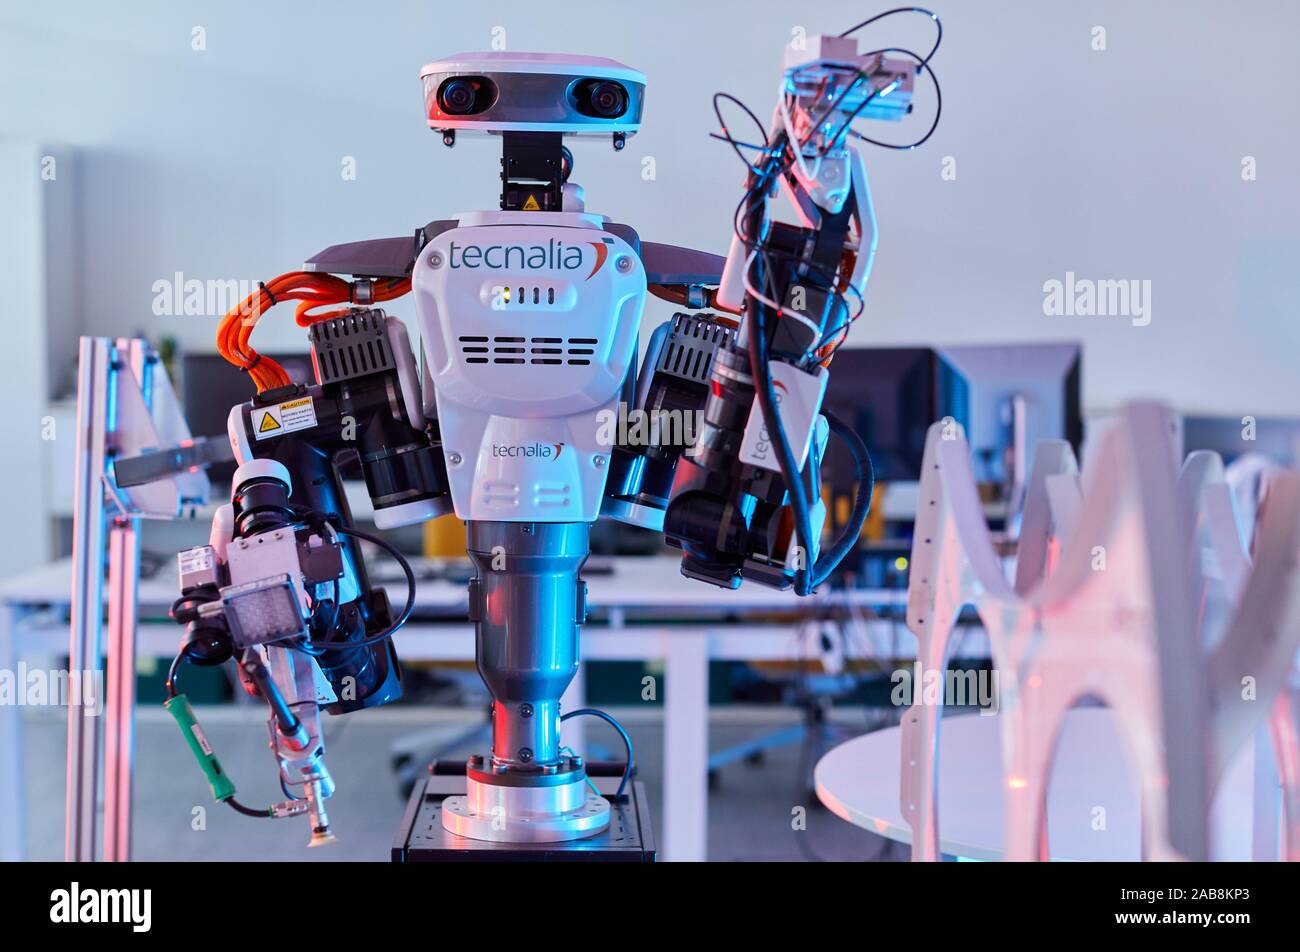 Robot Autonomy for Flexible Manufacturing, Collaborative robotic, Advanced manufacturing Unit, Technology Centre, Tecnalia Research & Innovation, Stock Photo